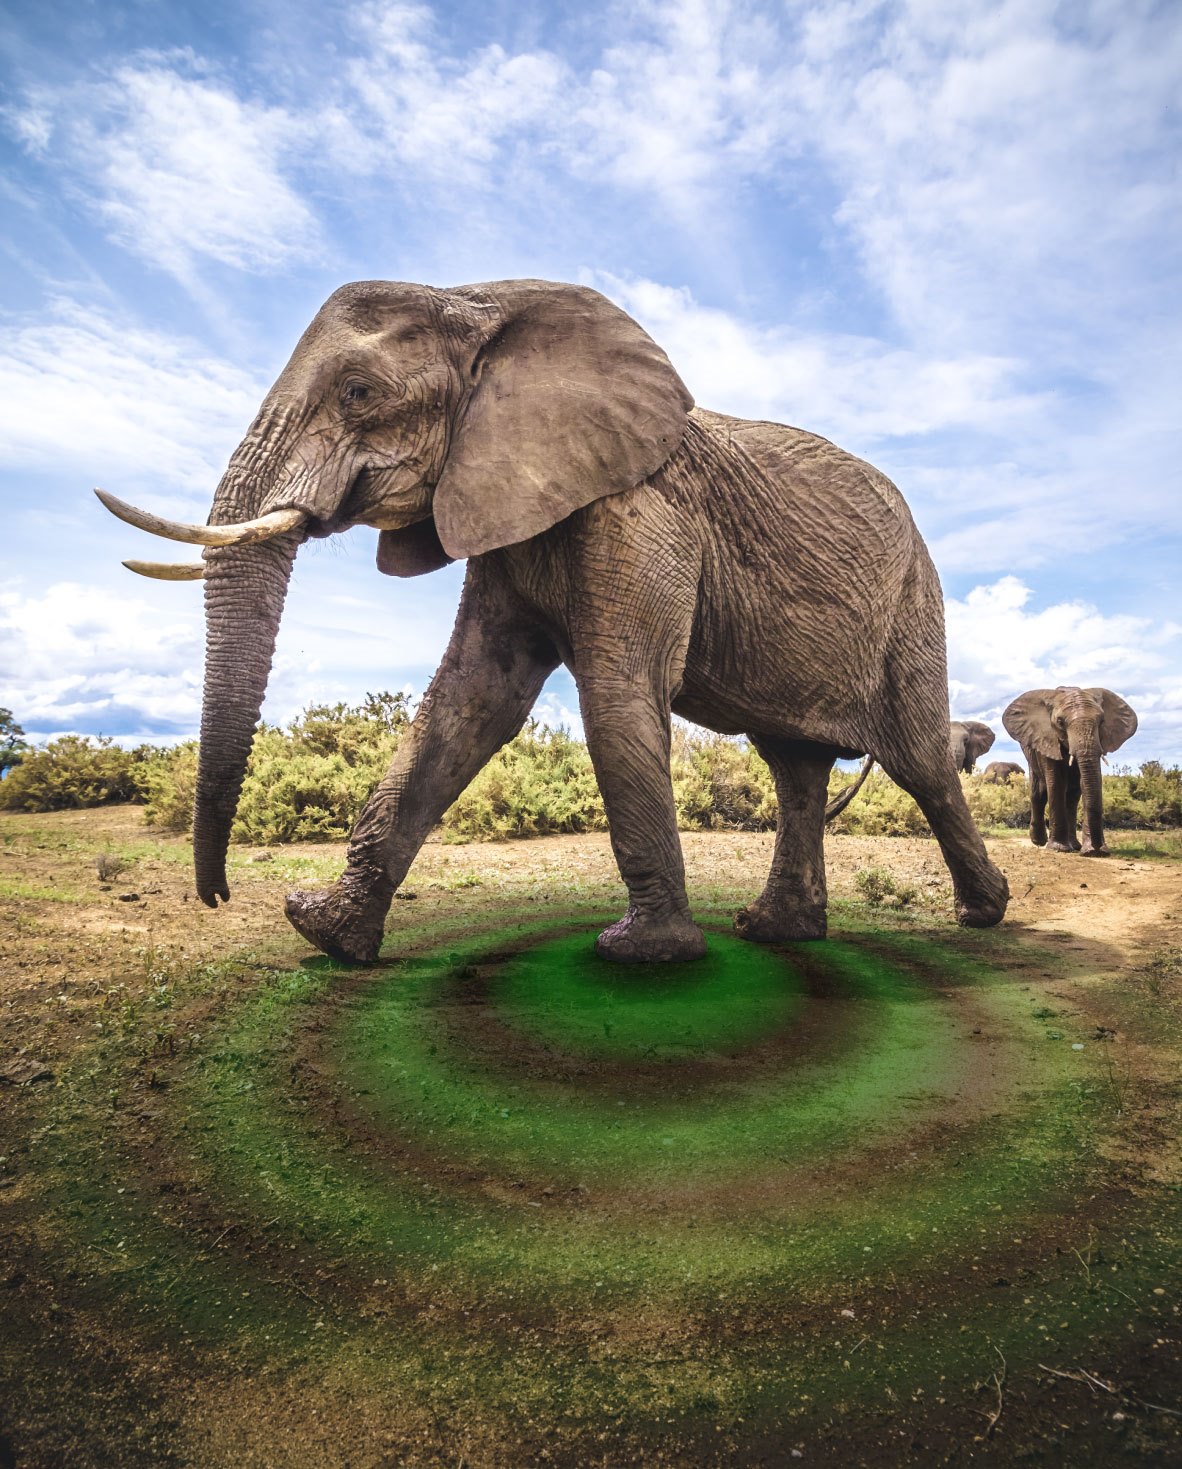 How Do Elephants Communicate Through Vibrations